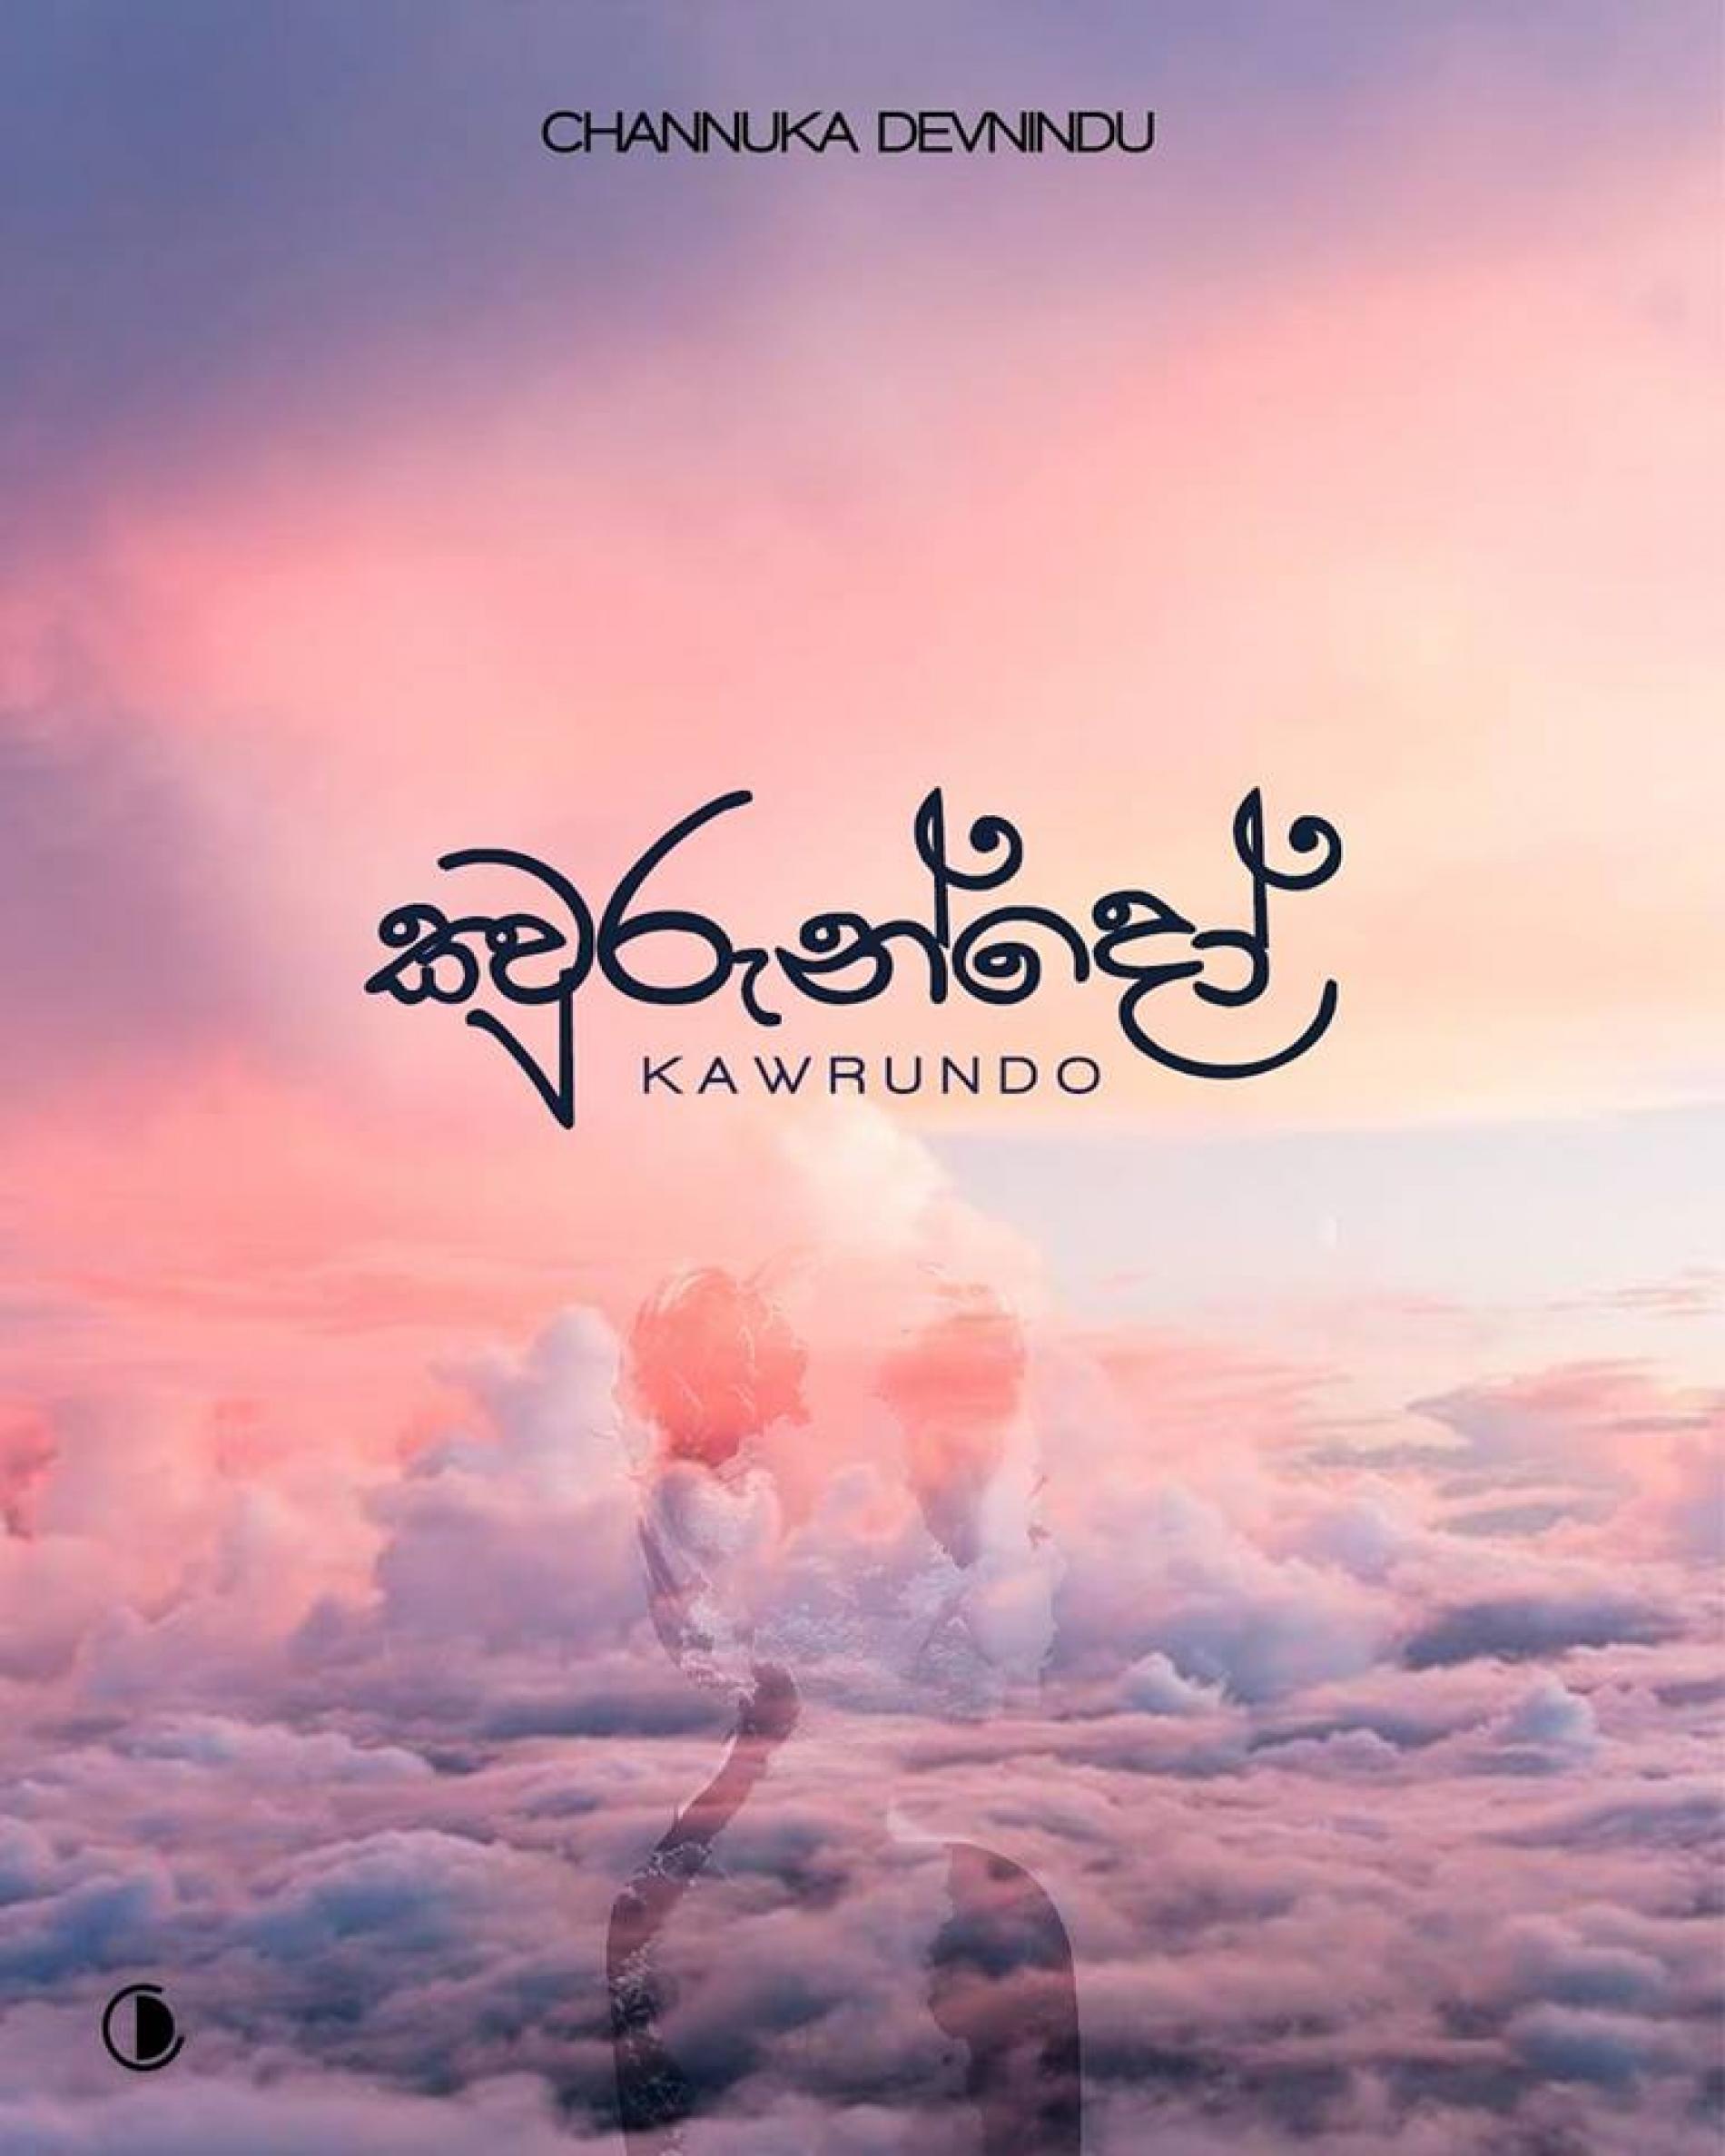 Channuka Devnindu – Kawrundo(කවුරුන්දෝ) [Official Audio]